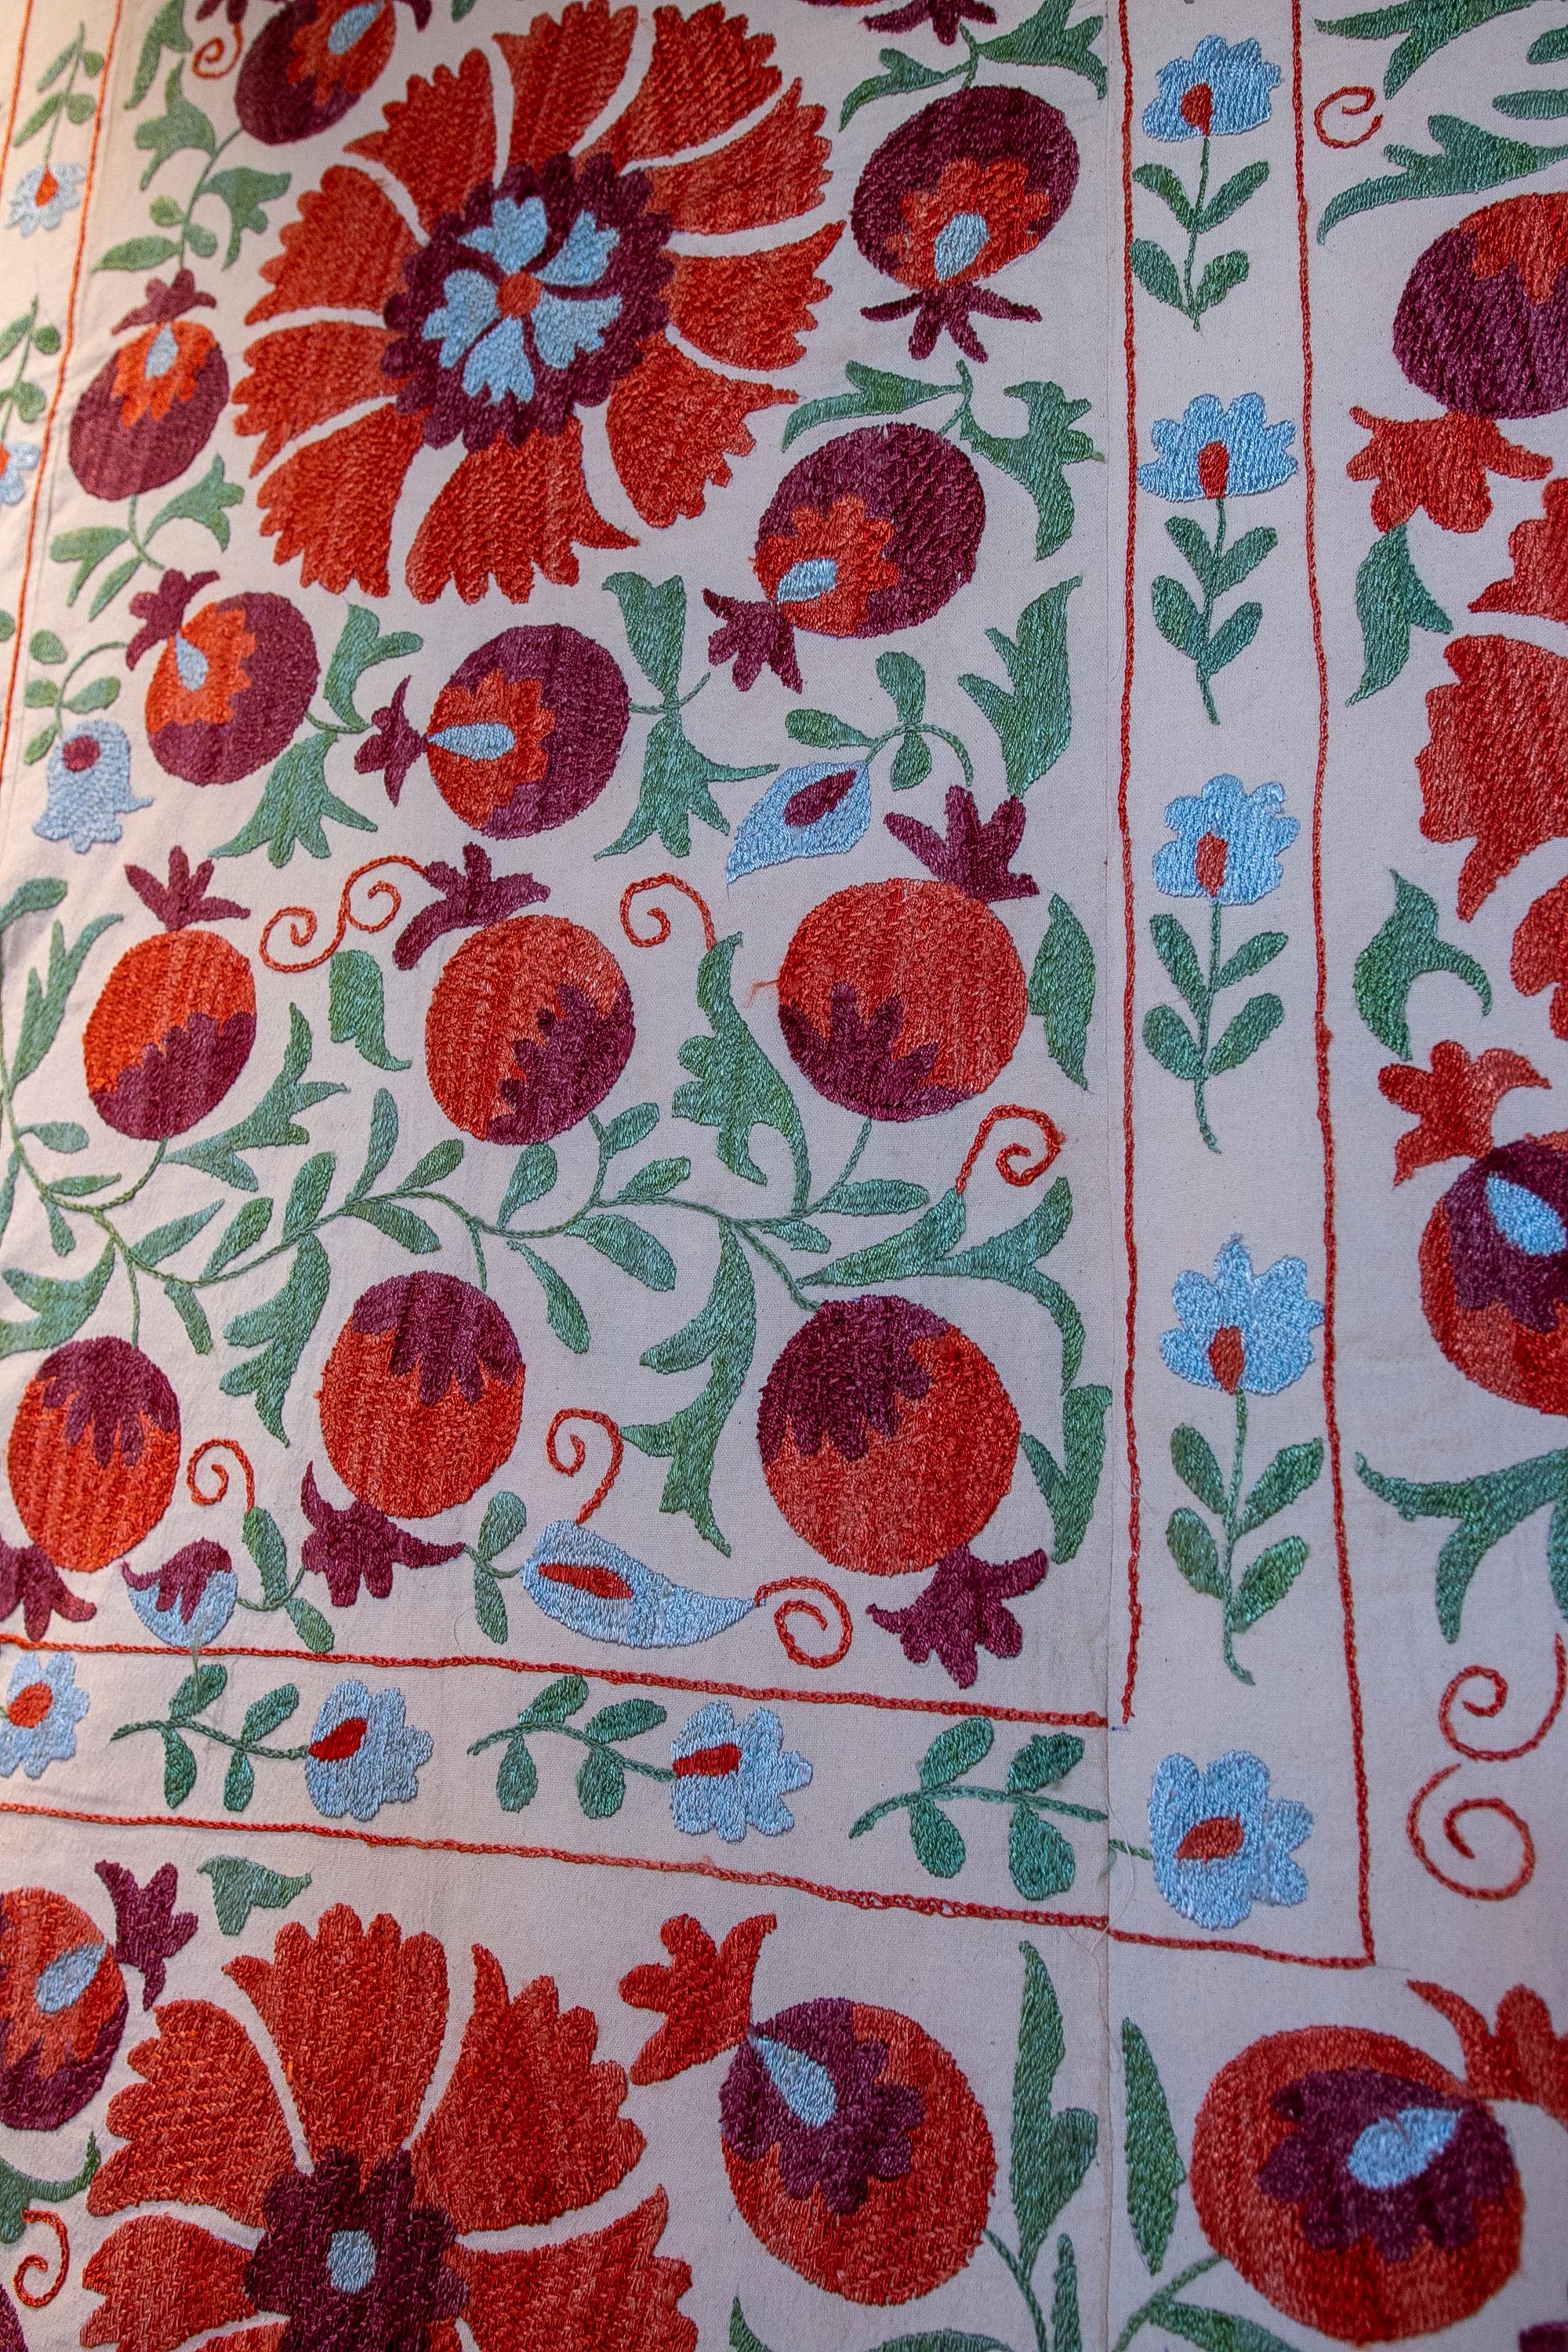 20th Century 1970s Uzbekistan Hand Stitched Fabric Known as Suzani 